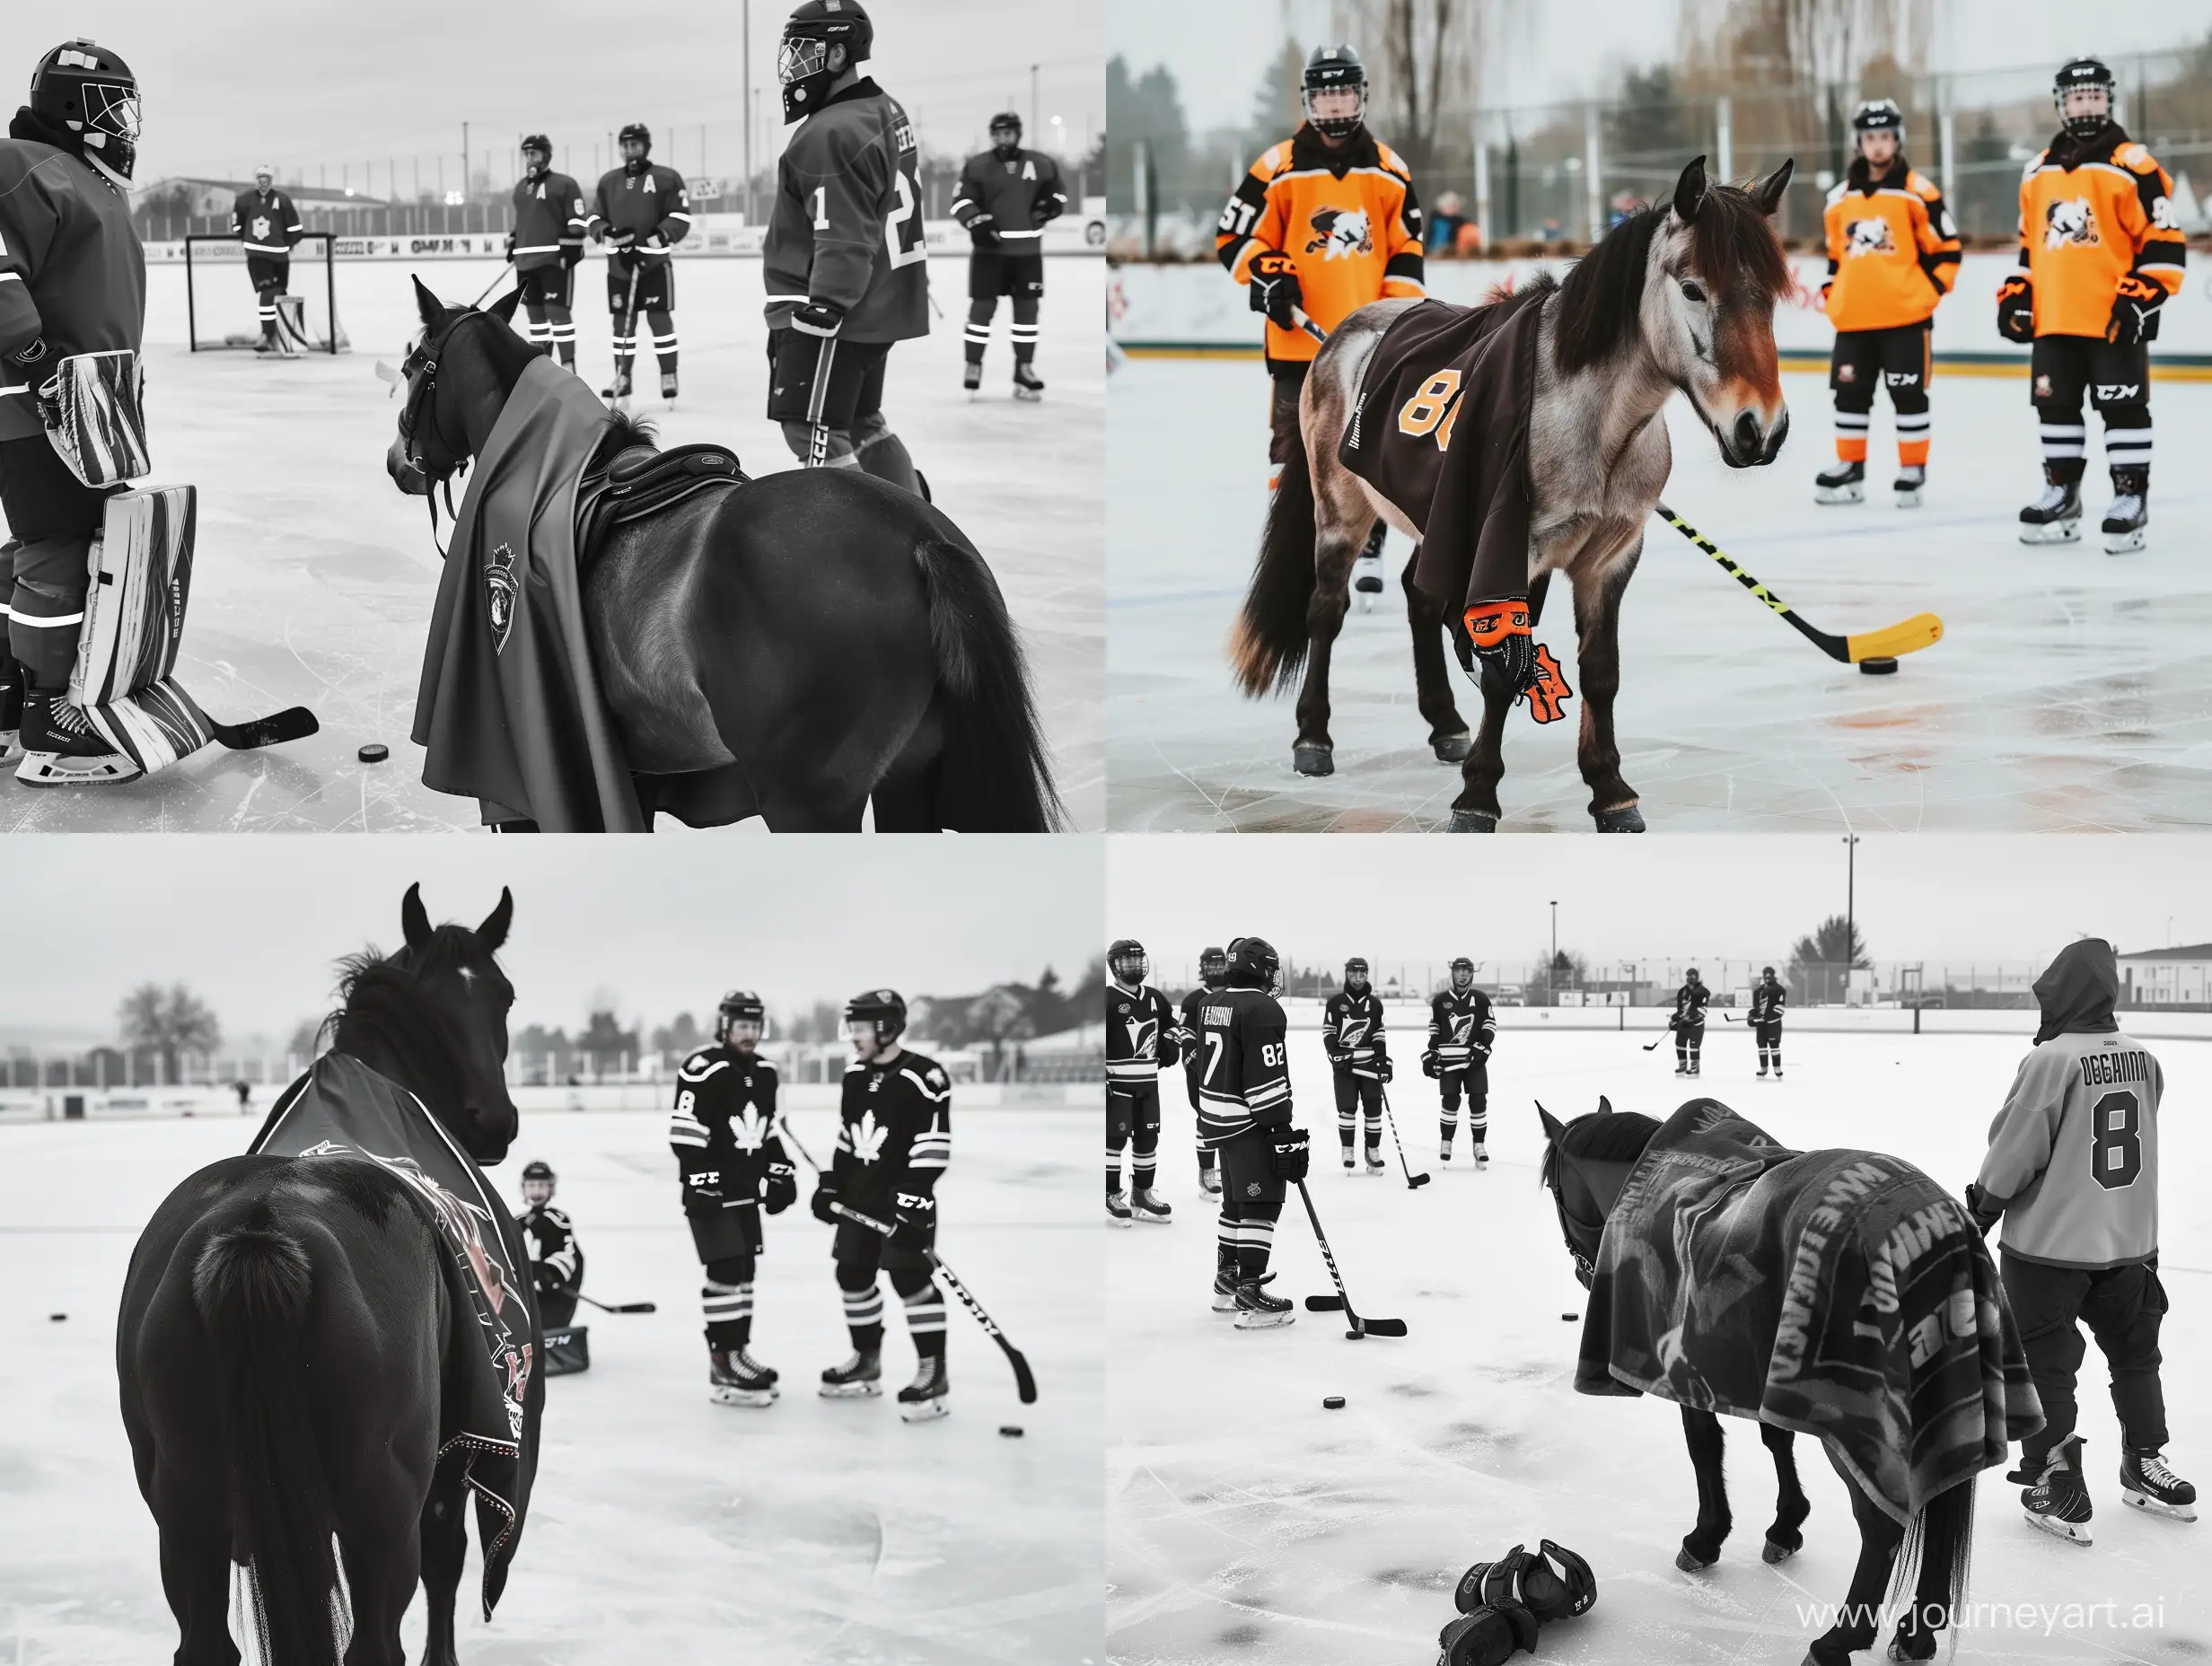 Hockey-Players-Admiring-Horse-on-Ice-Field